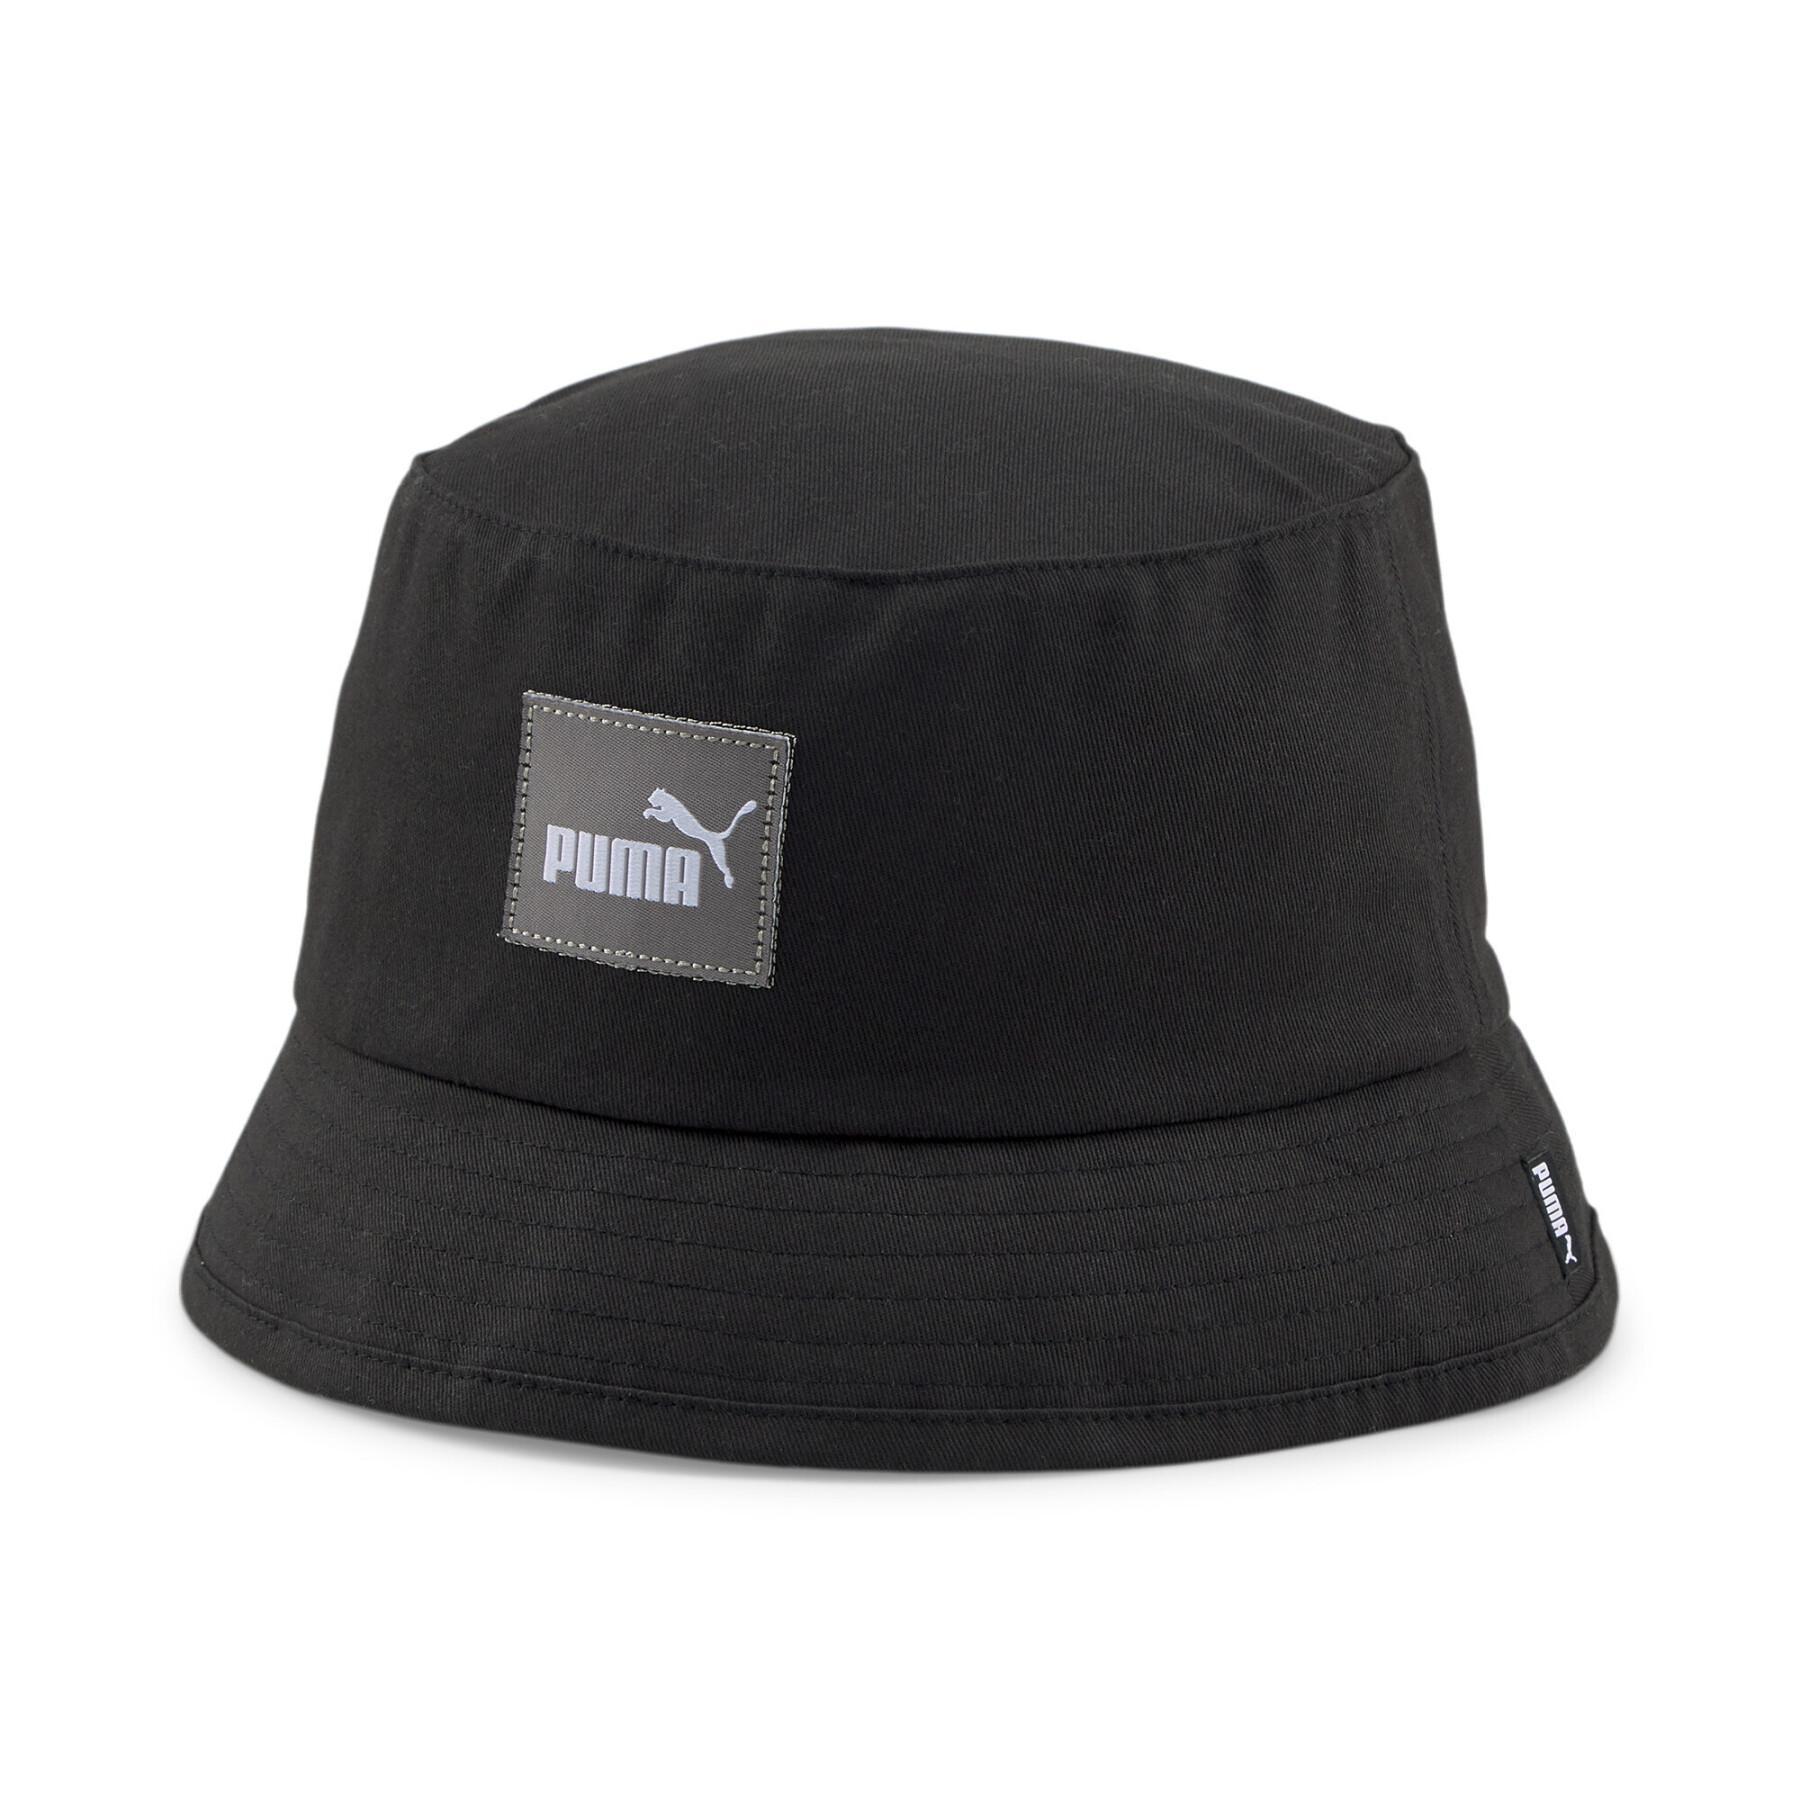 Puma core bucket hat